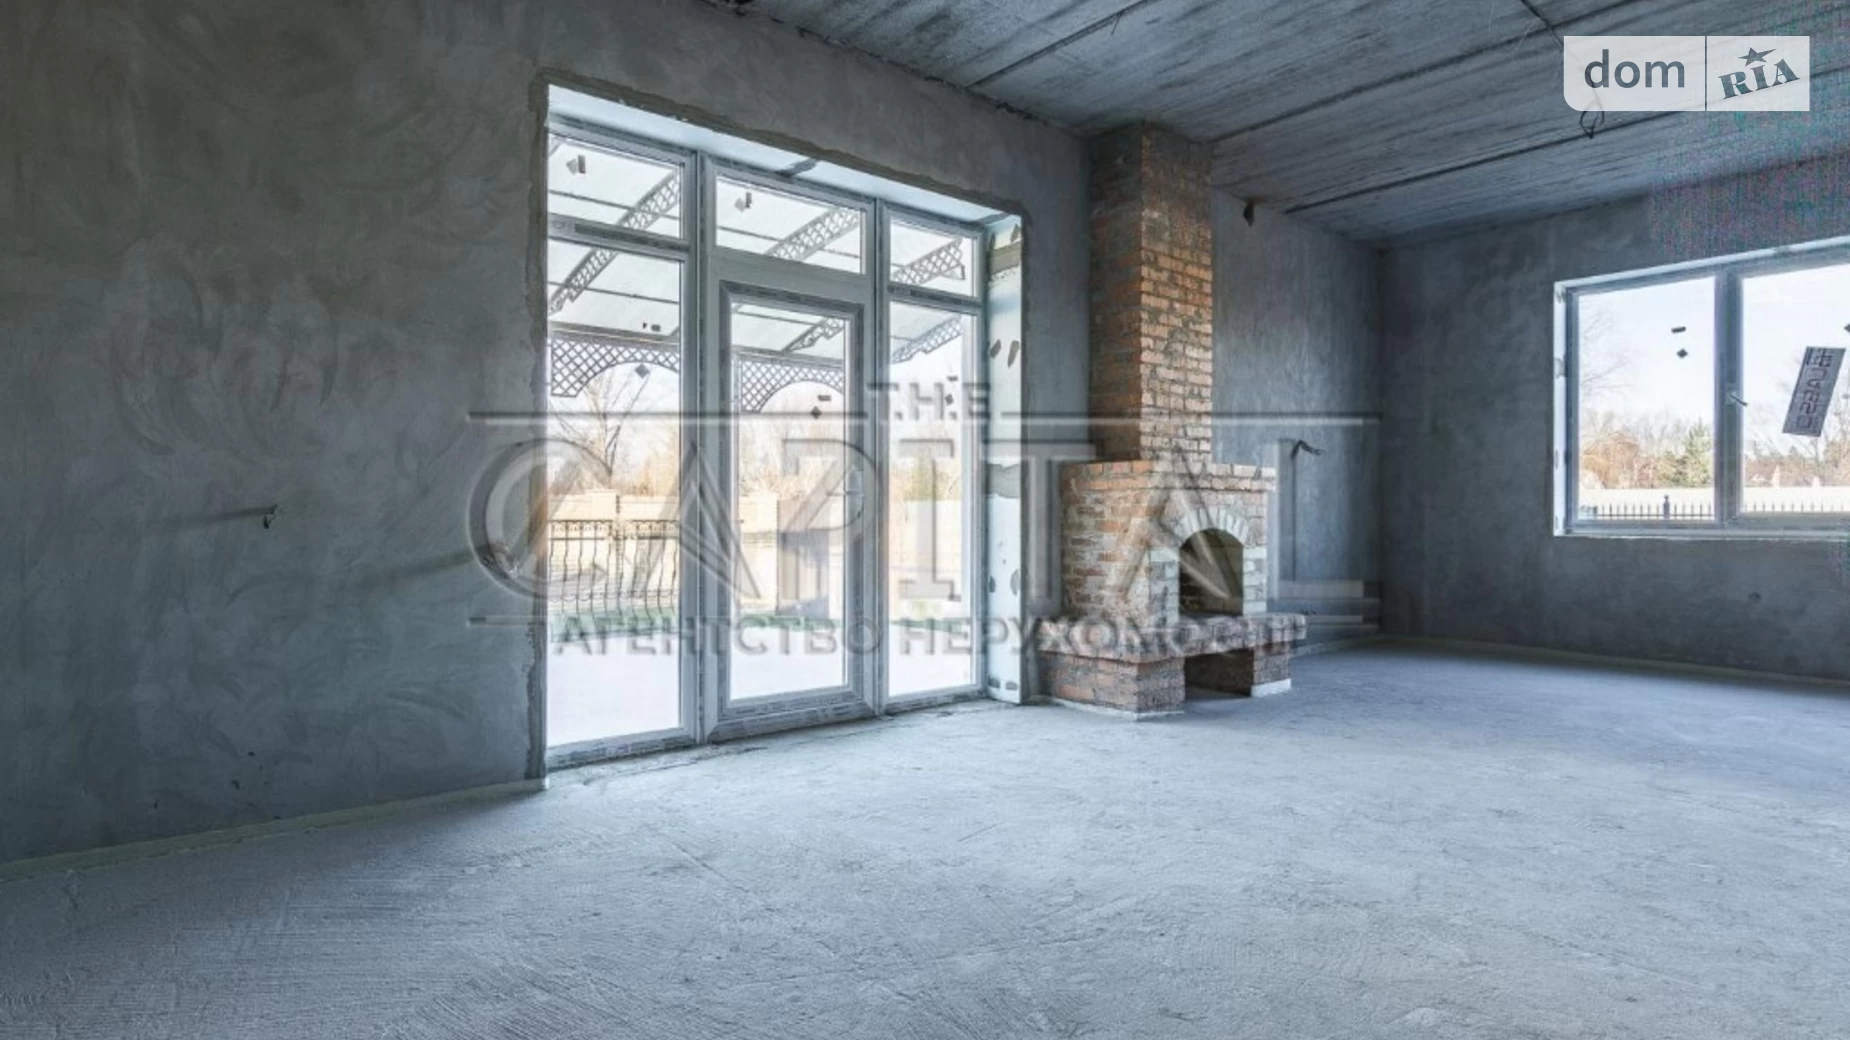 Продается дом на 2 этажа 165 кв. м с камином, Романків - фото 4